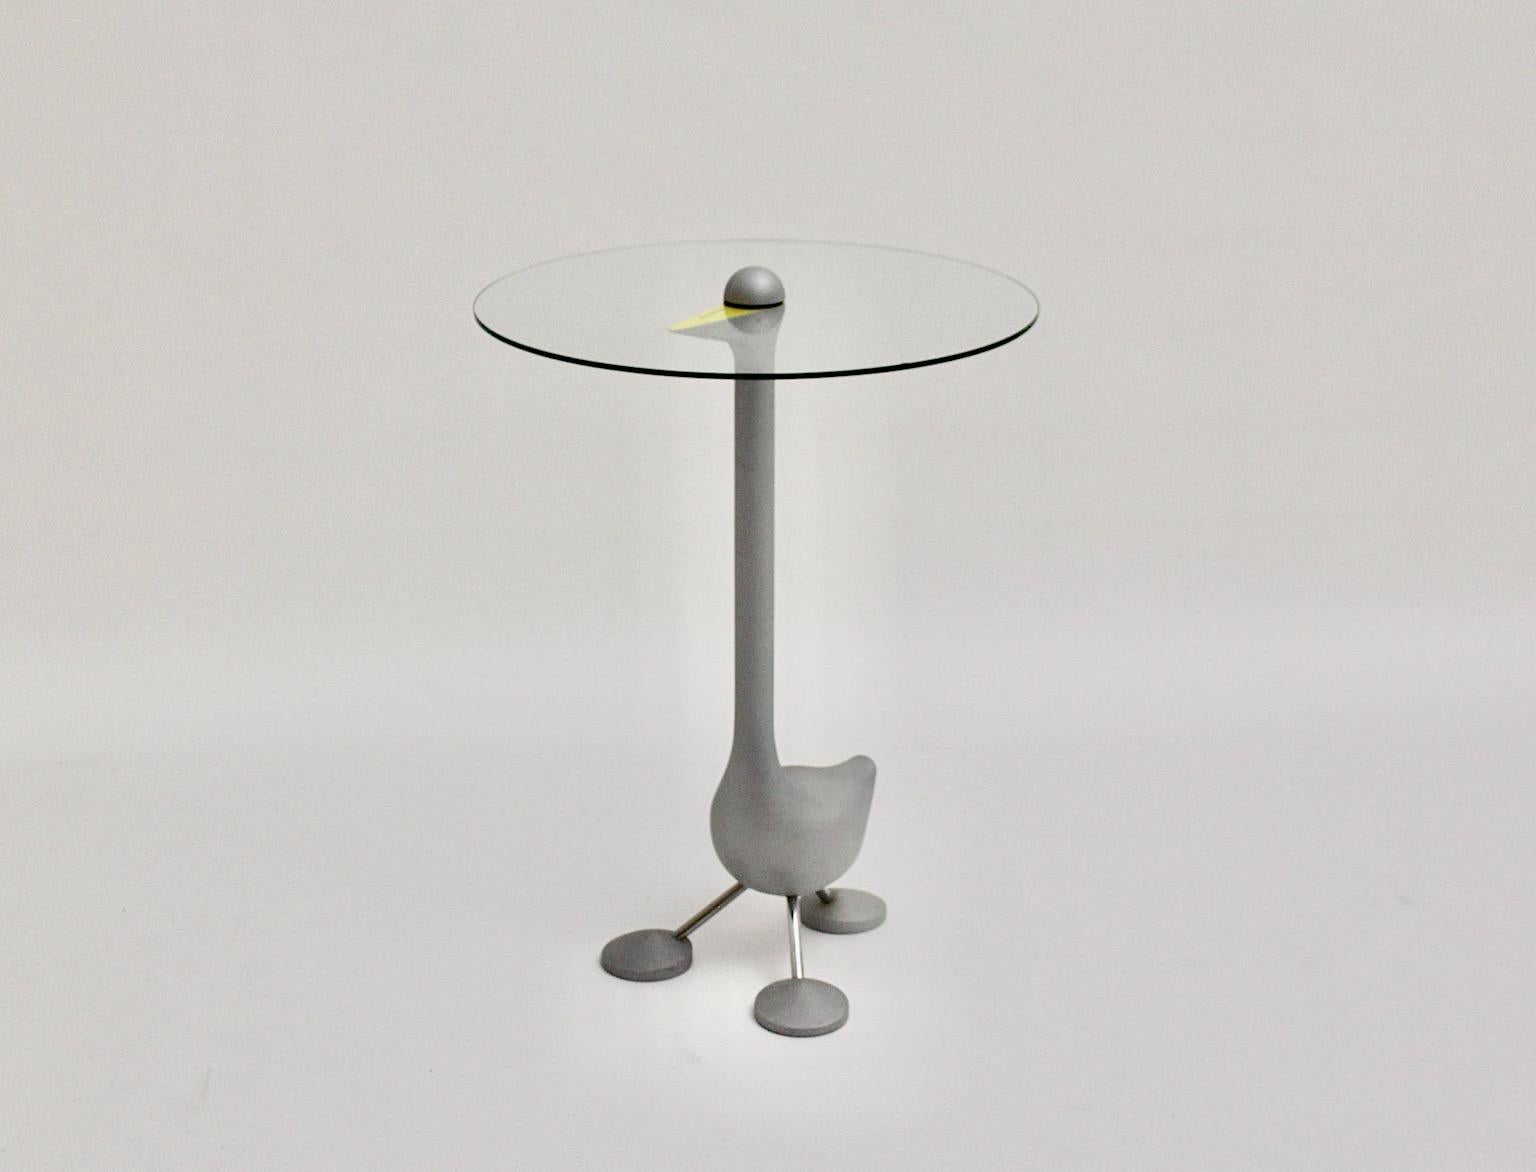 Late 20th Century Postmodern Vintage Side Table Sirfo Alessandro Mendini Zanotta Edizione 1986 For Sale